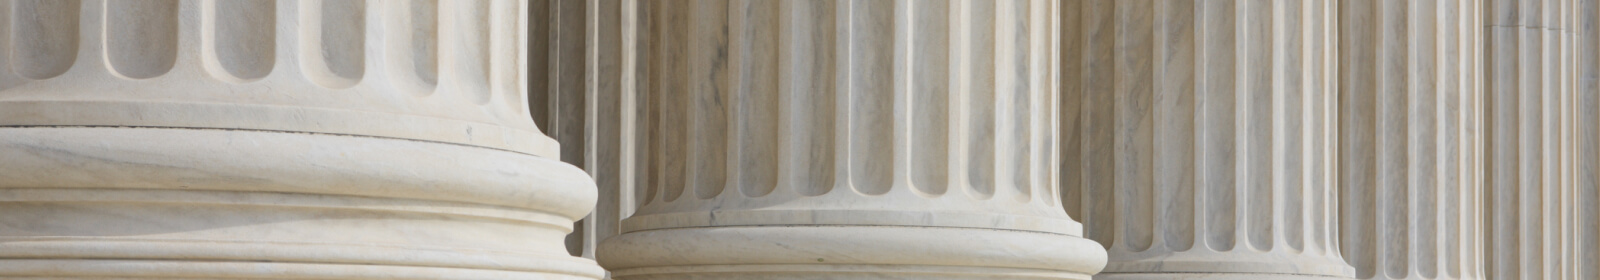 Detailed shot of white stone pillars